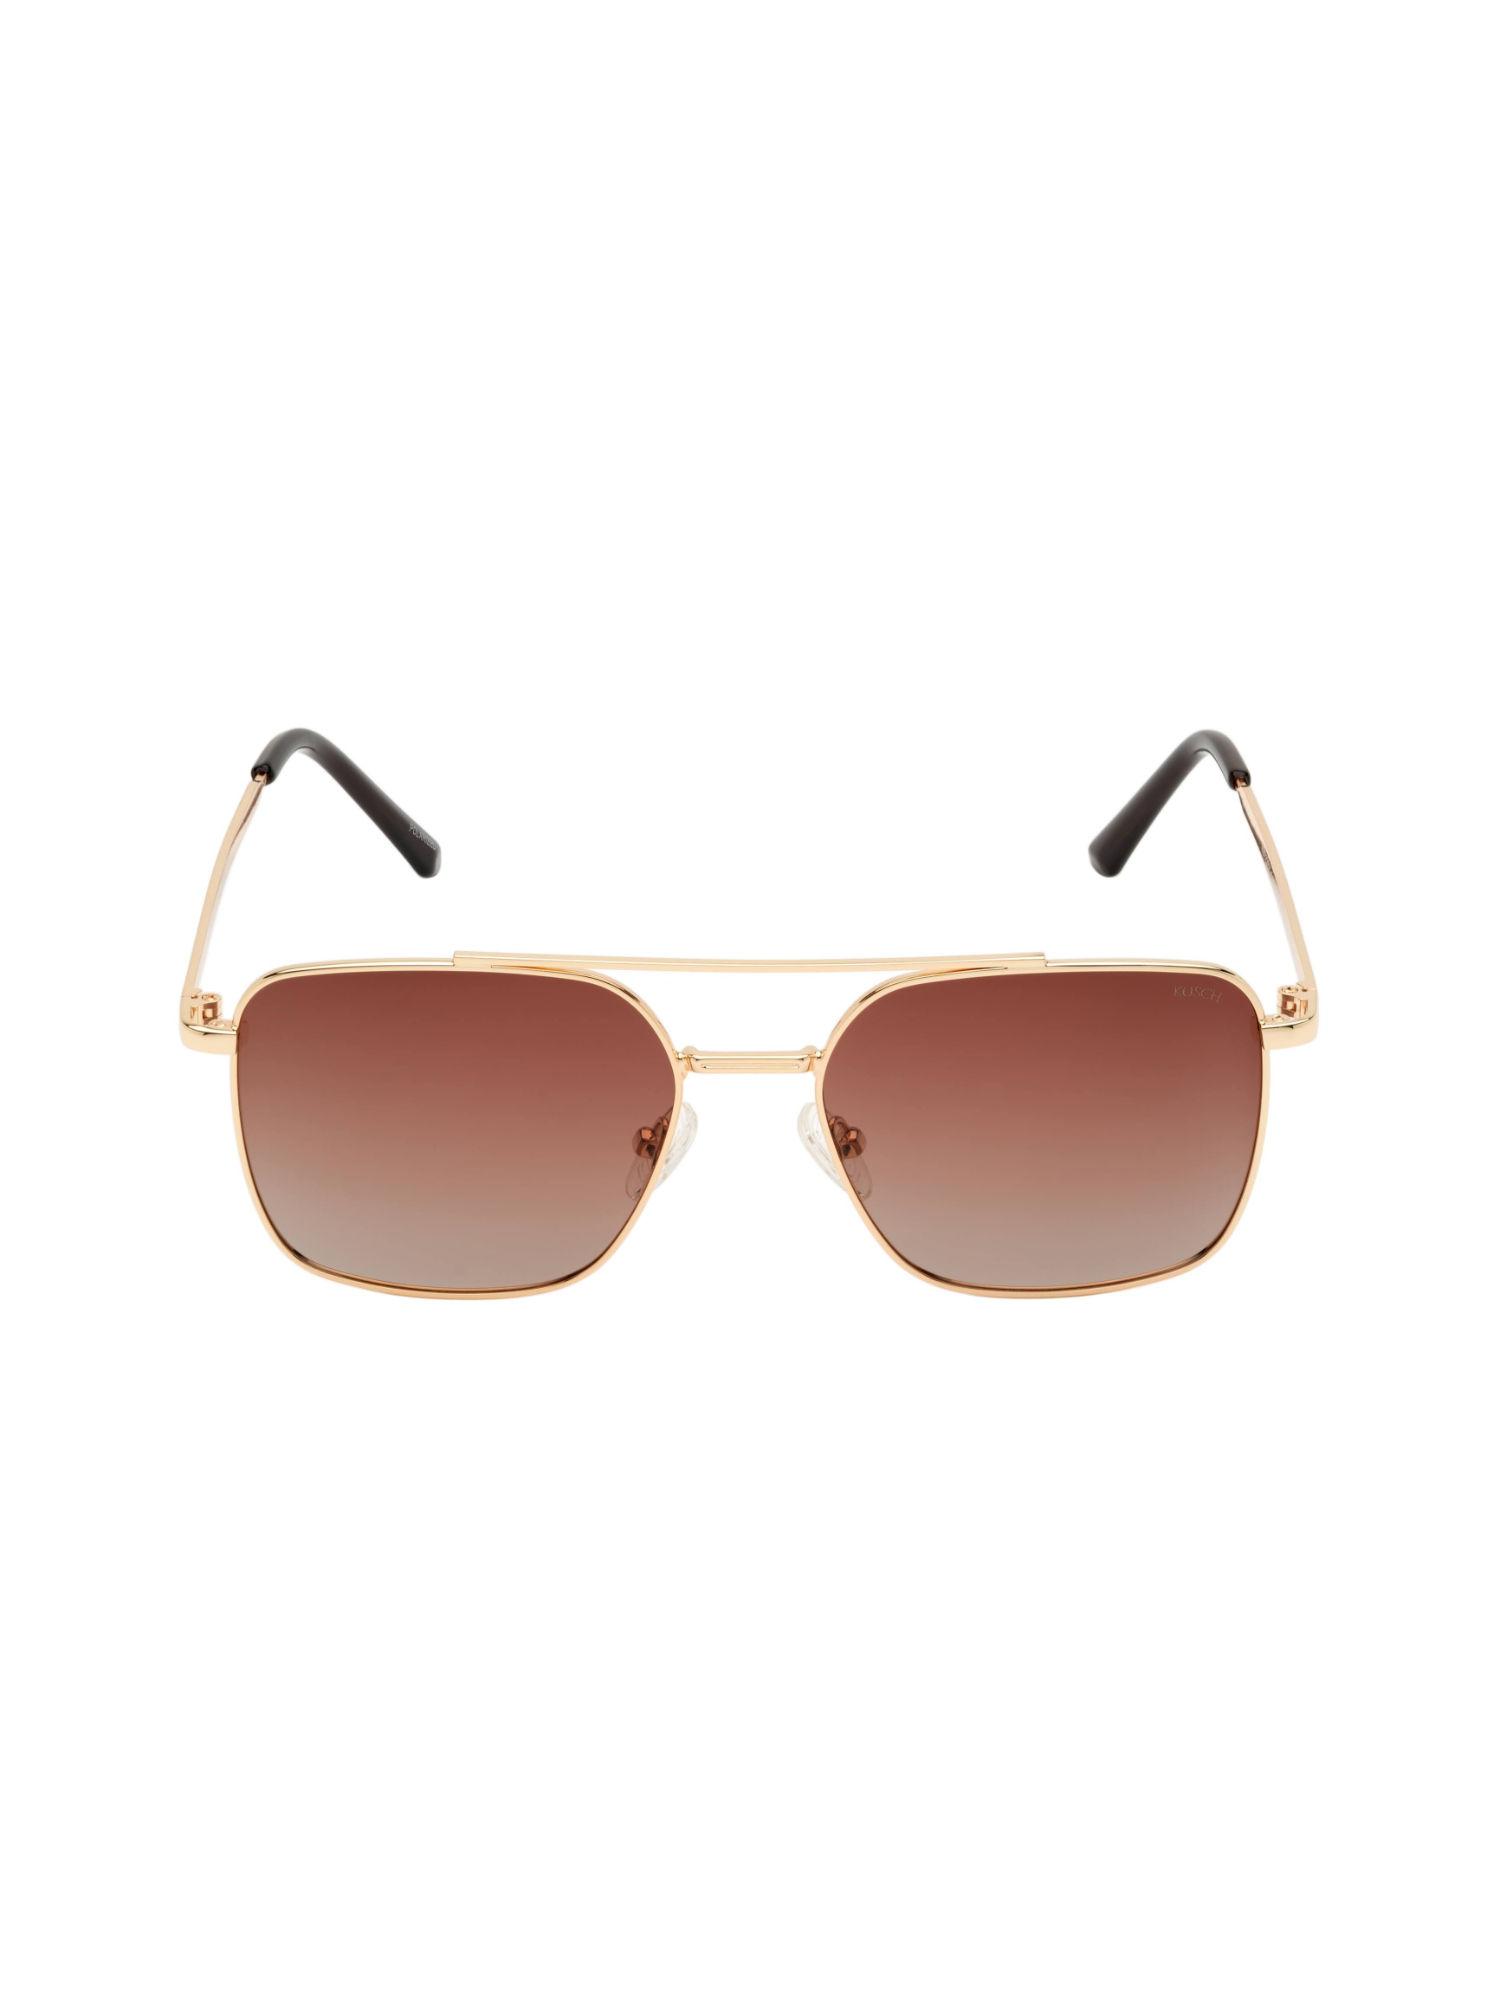 brown - rectangle shape sunglasses - kst 22827